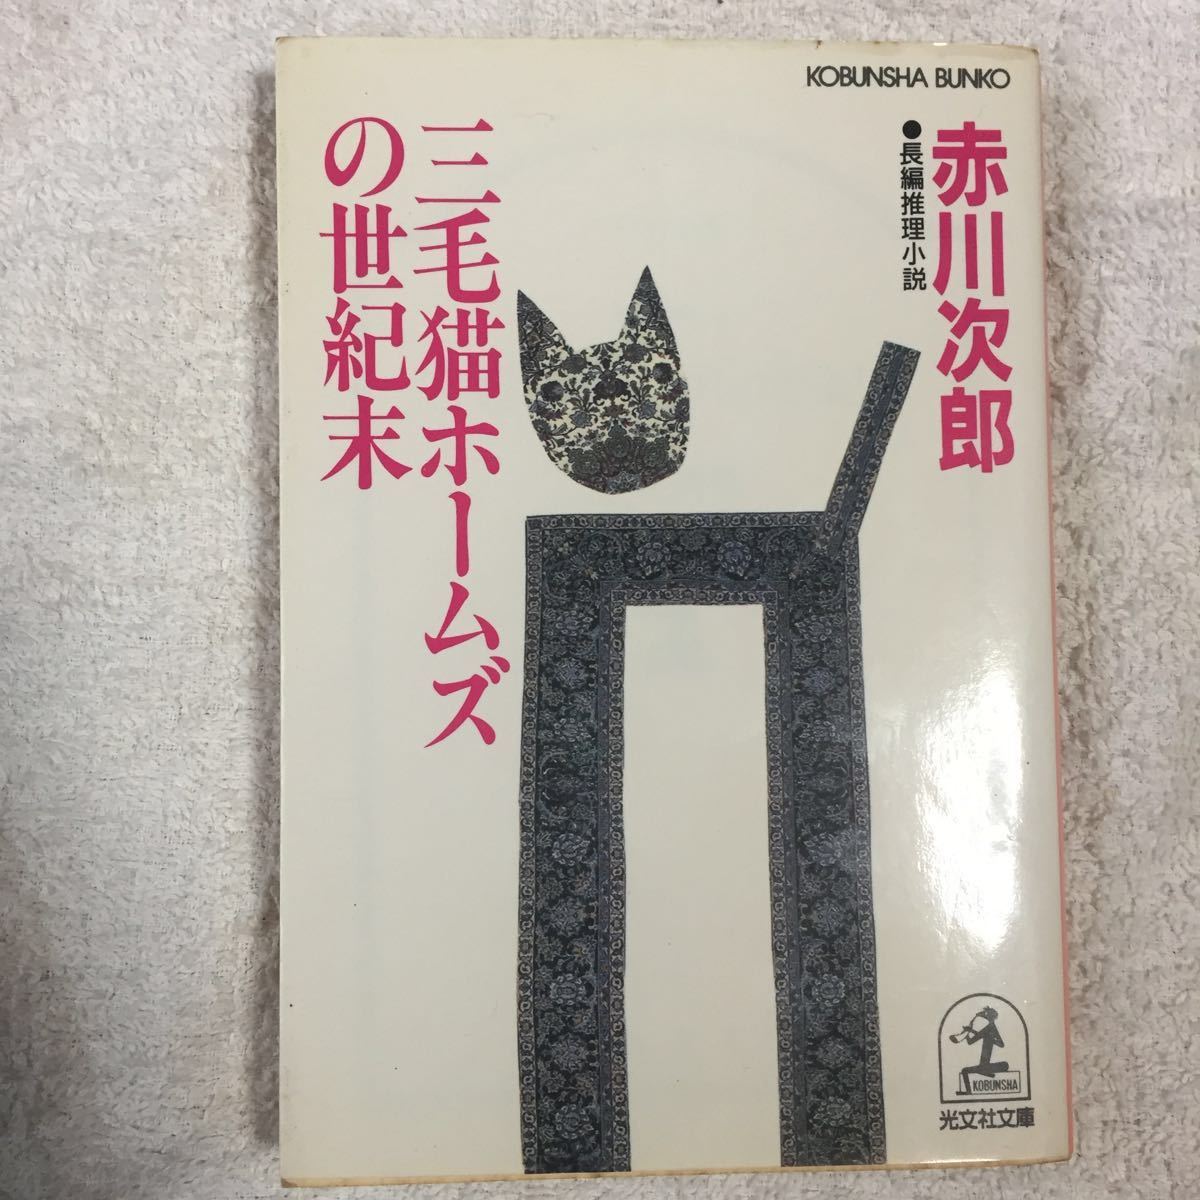  три шерсть кошка Home z. век конец ( Kobunsha bunko ) Akagawa Jiro 9784334725969